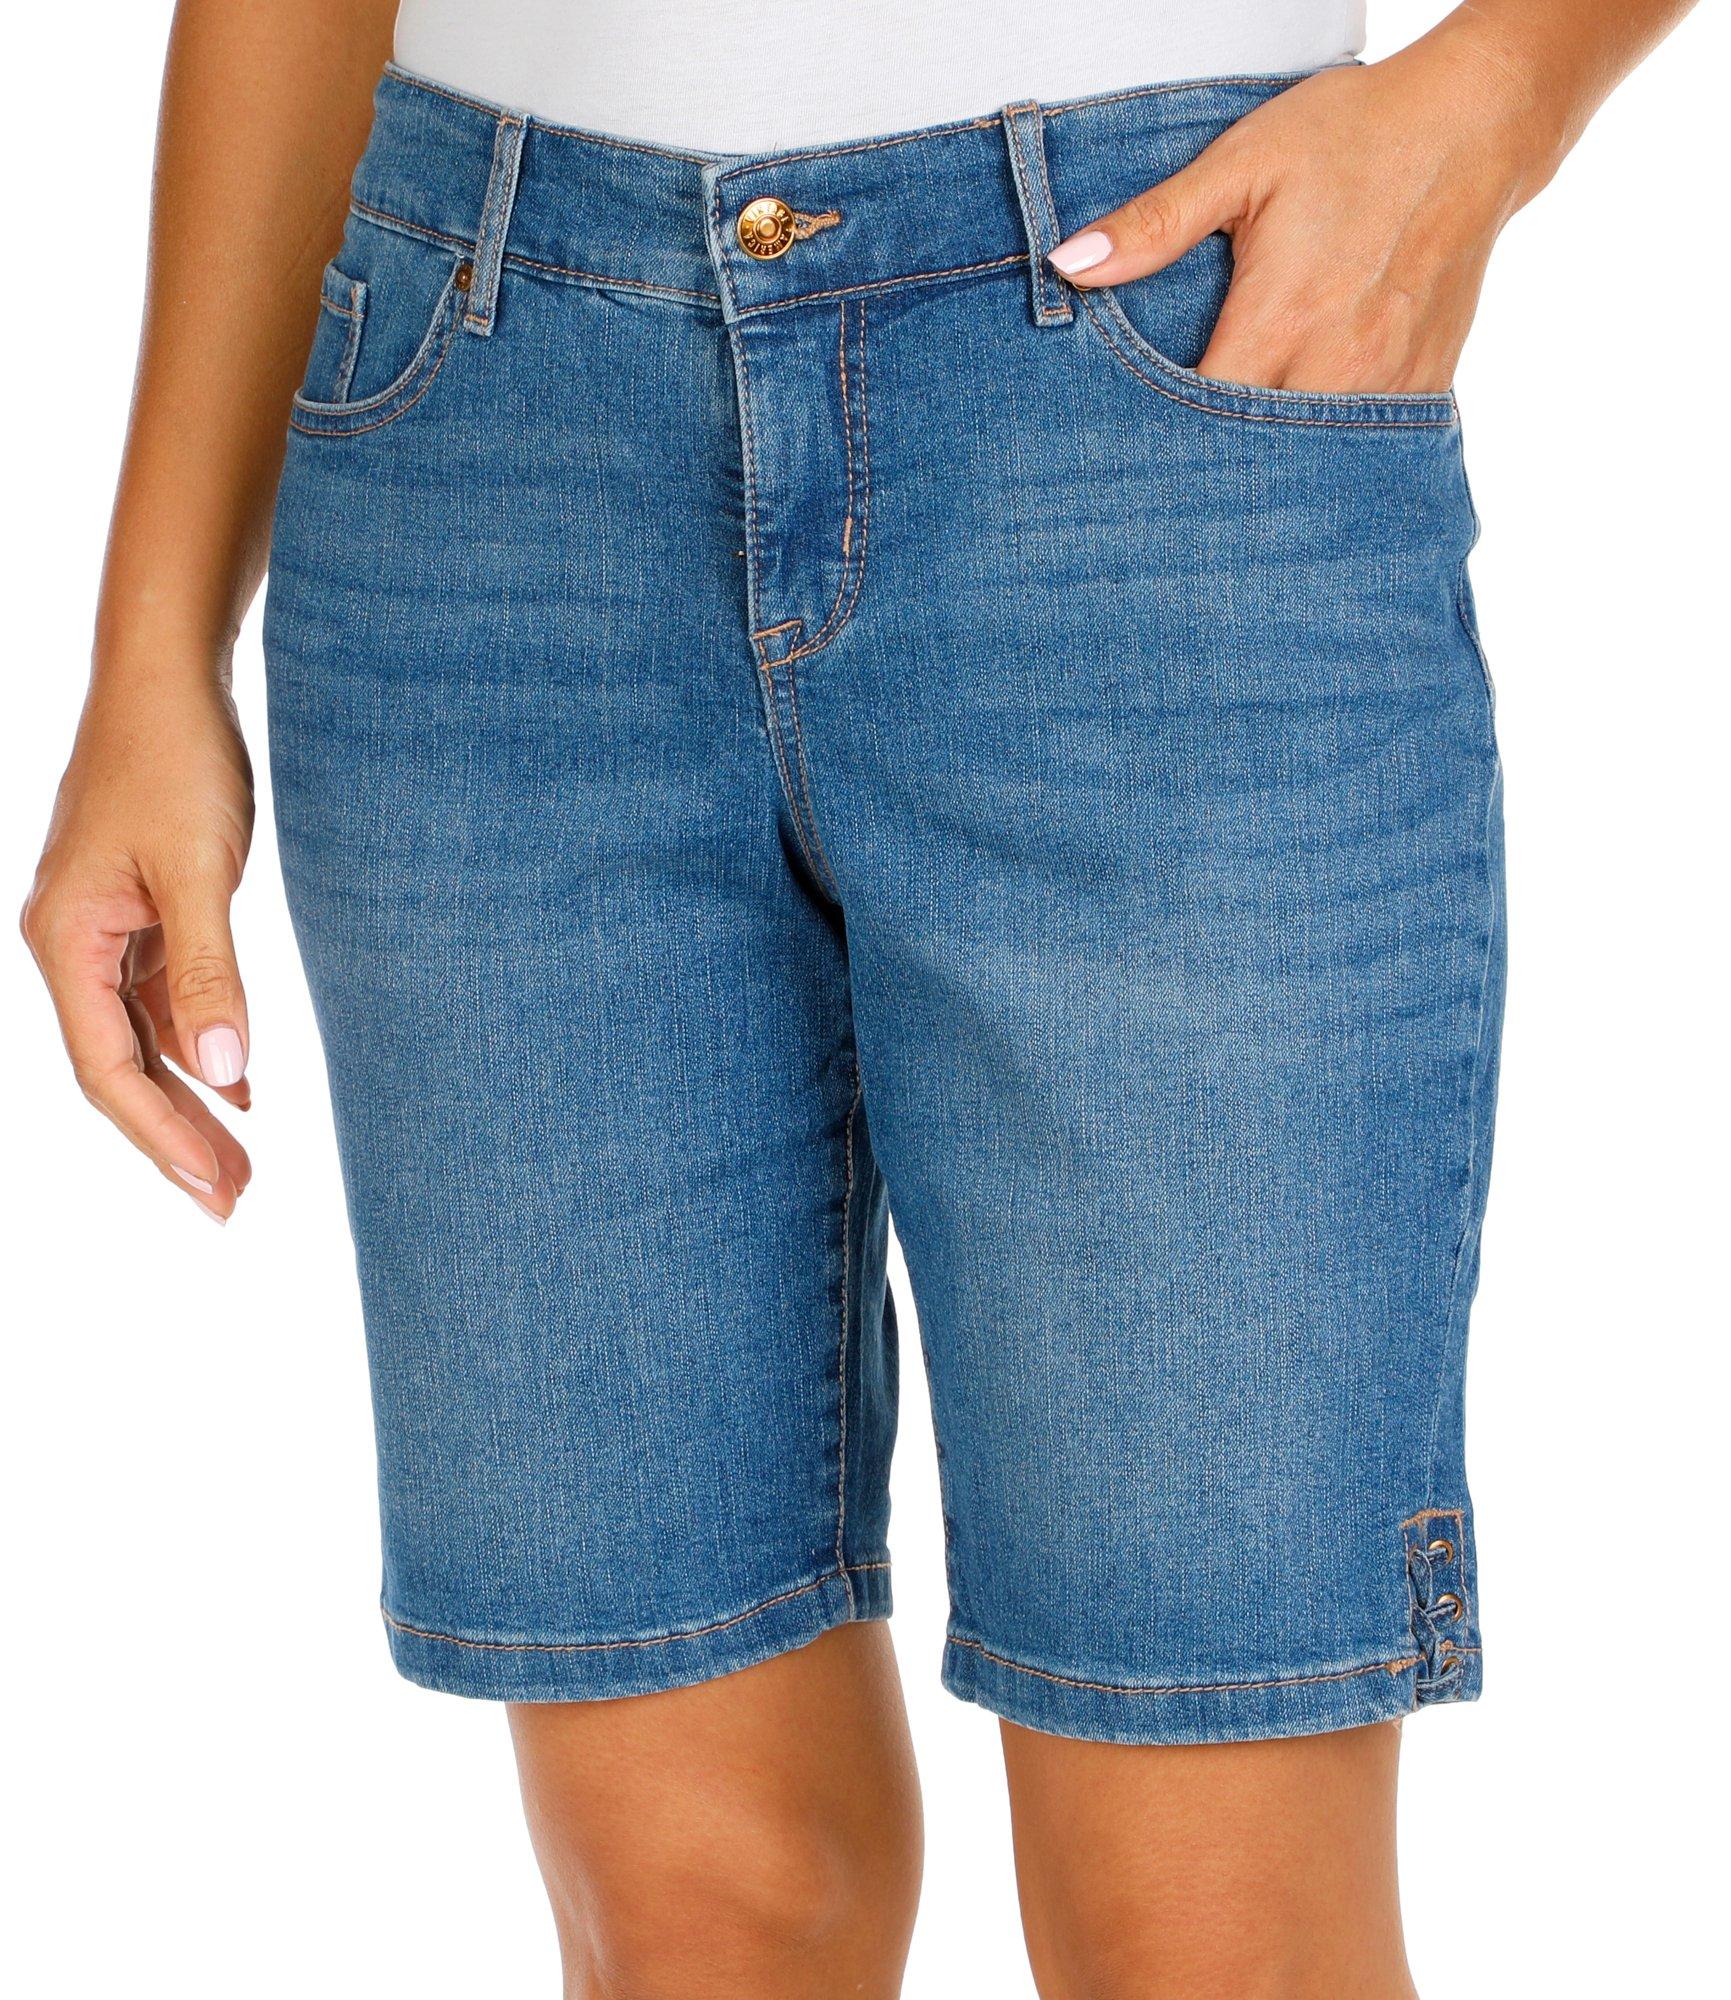 Women's Petite Denim Shorts